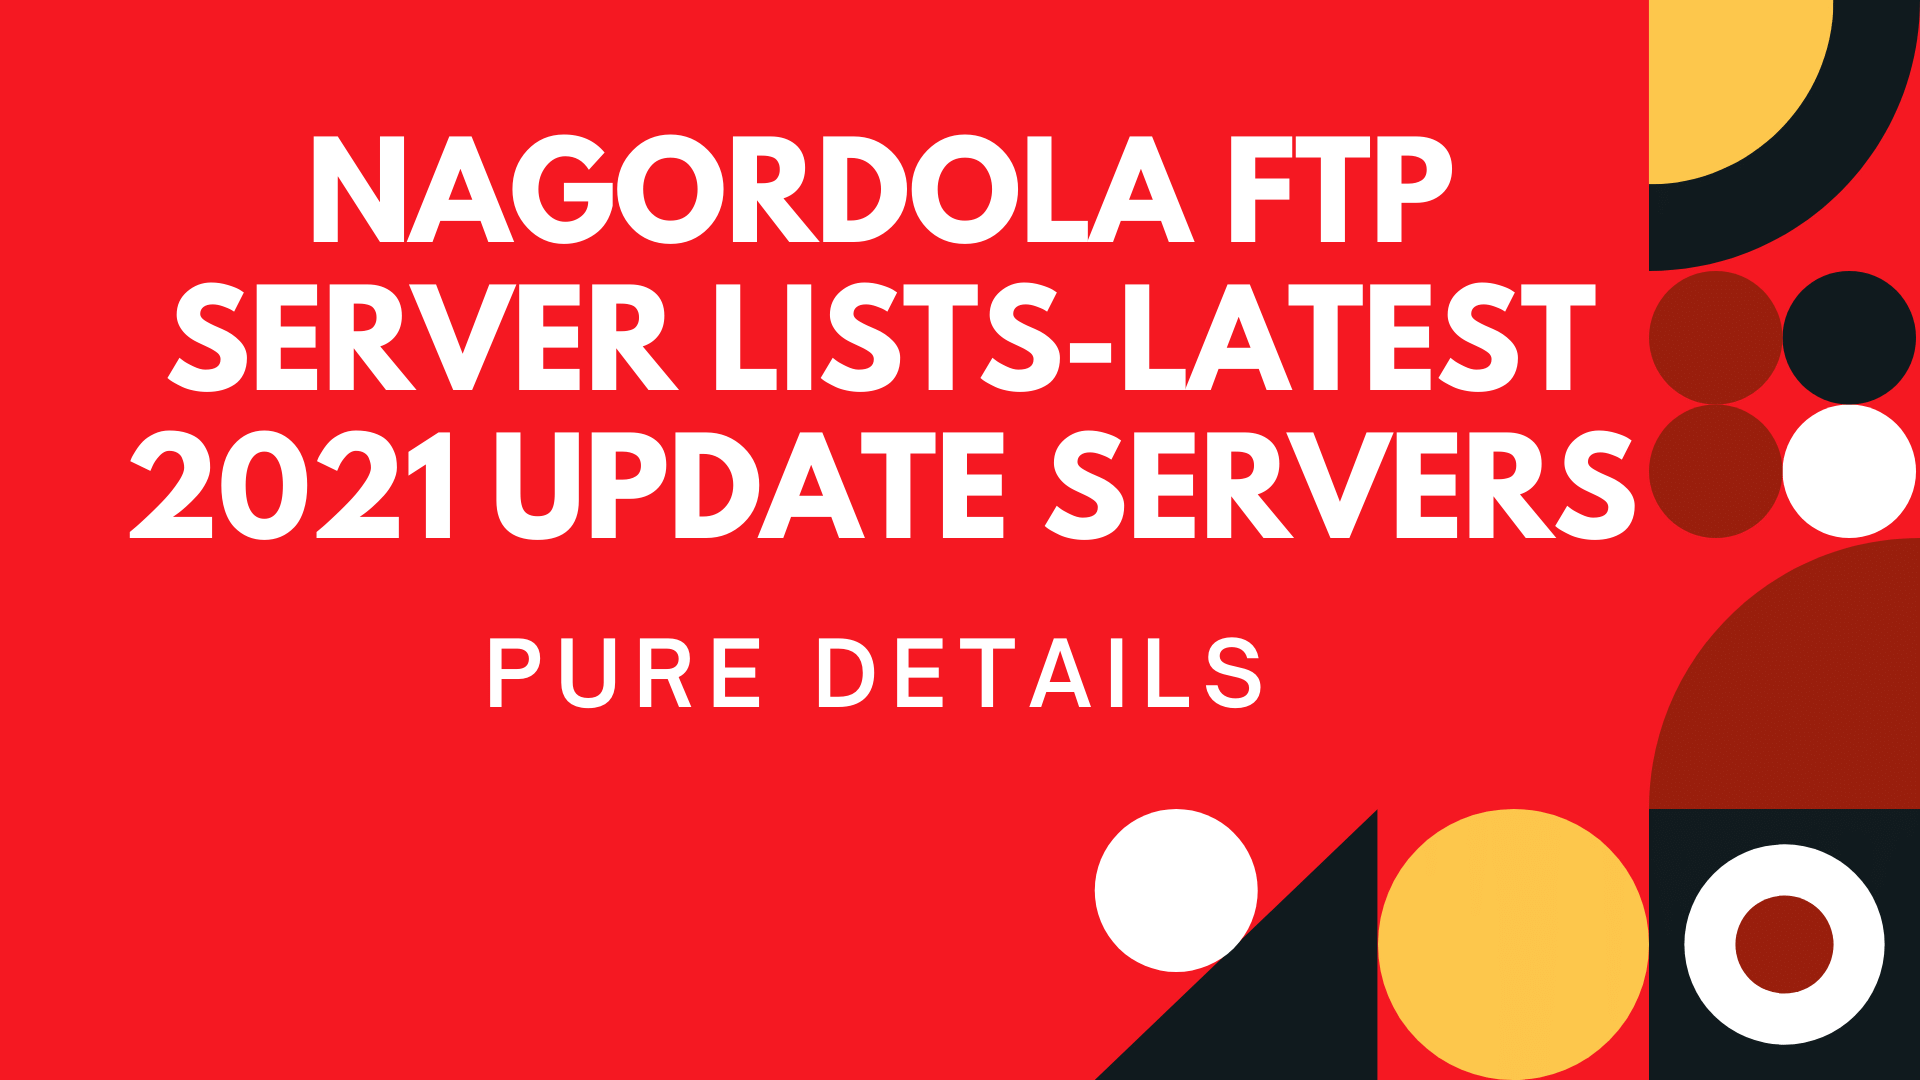 NAGORDOLA FTP SERVER LISTS-LATEST 2021 UPDATE SERVERS